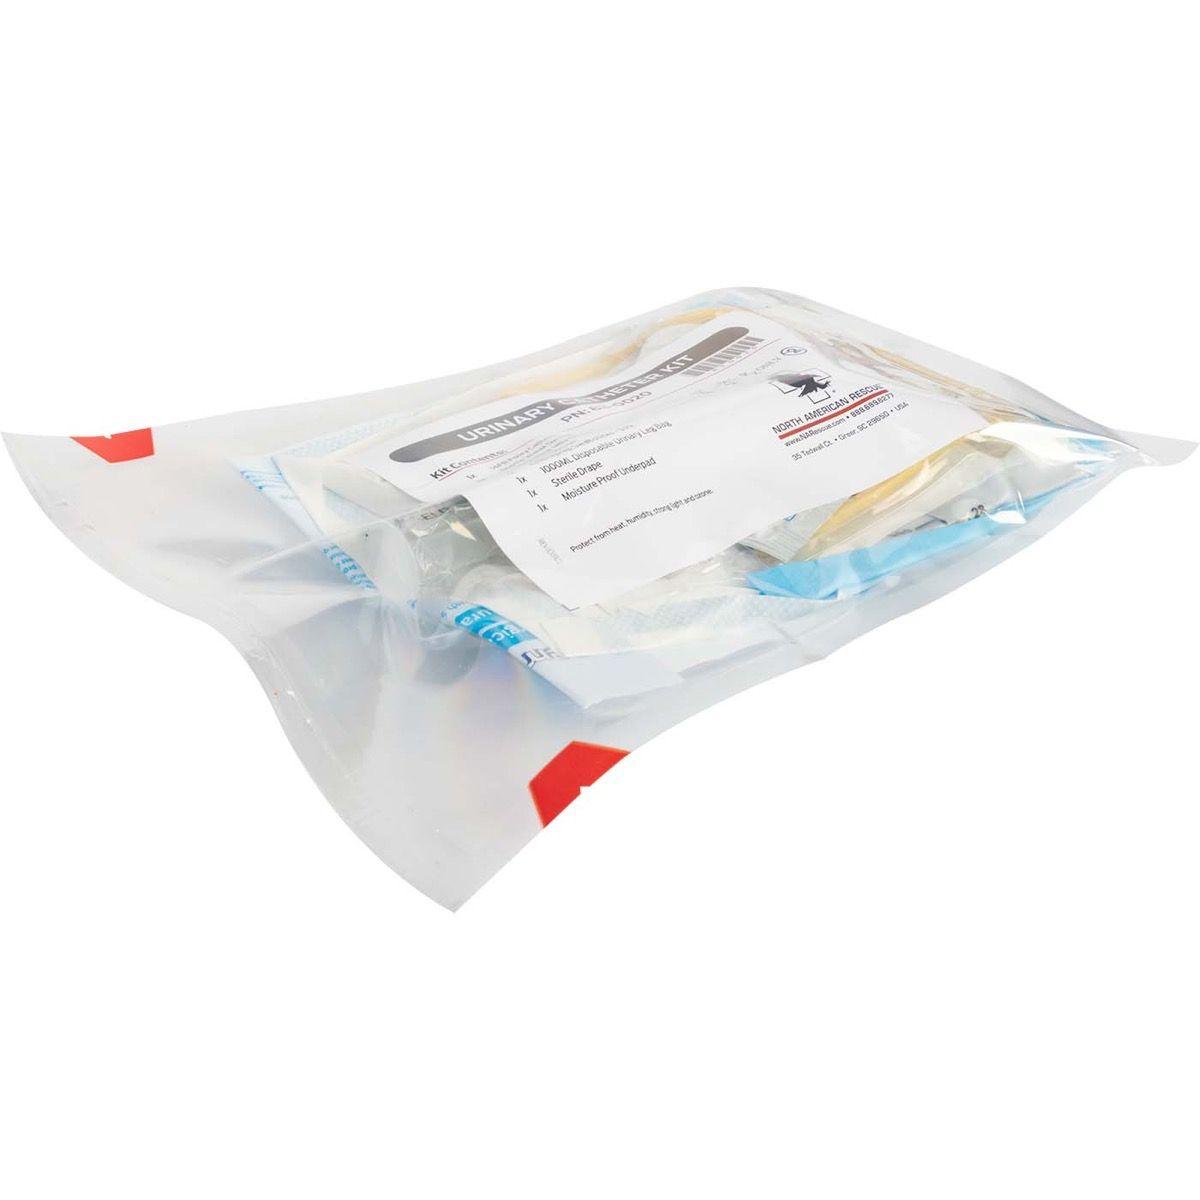 Urinary Catheter Kit - Vendor